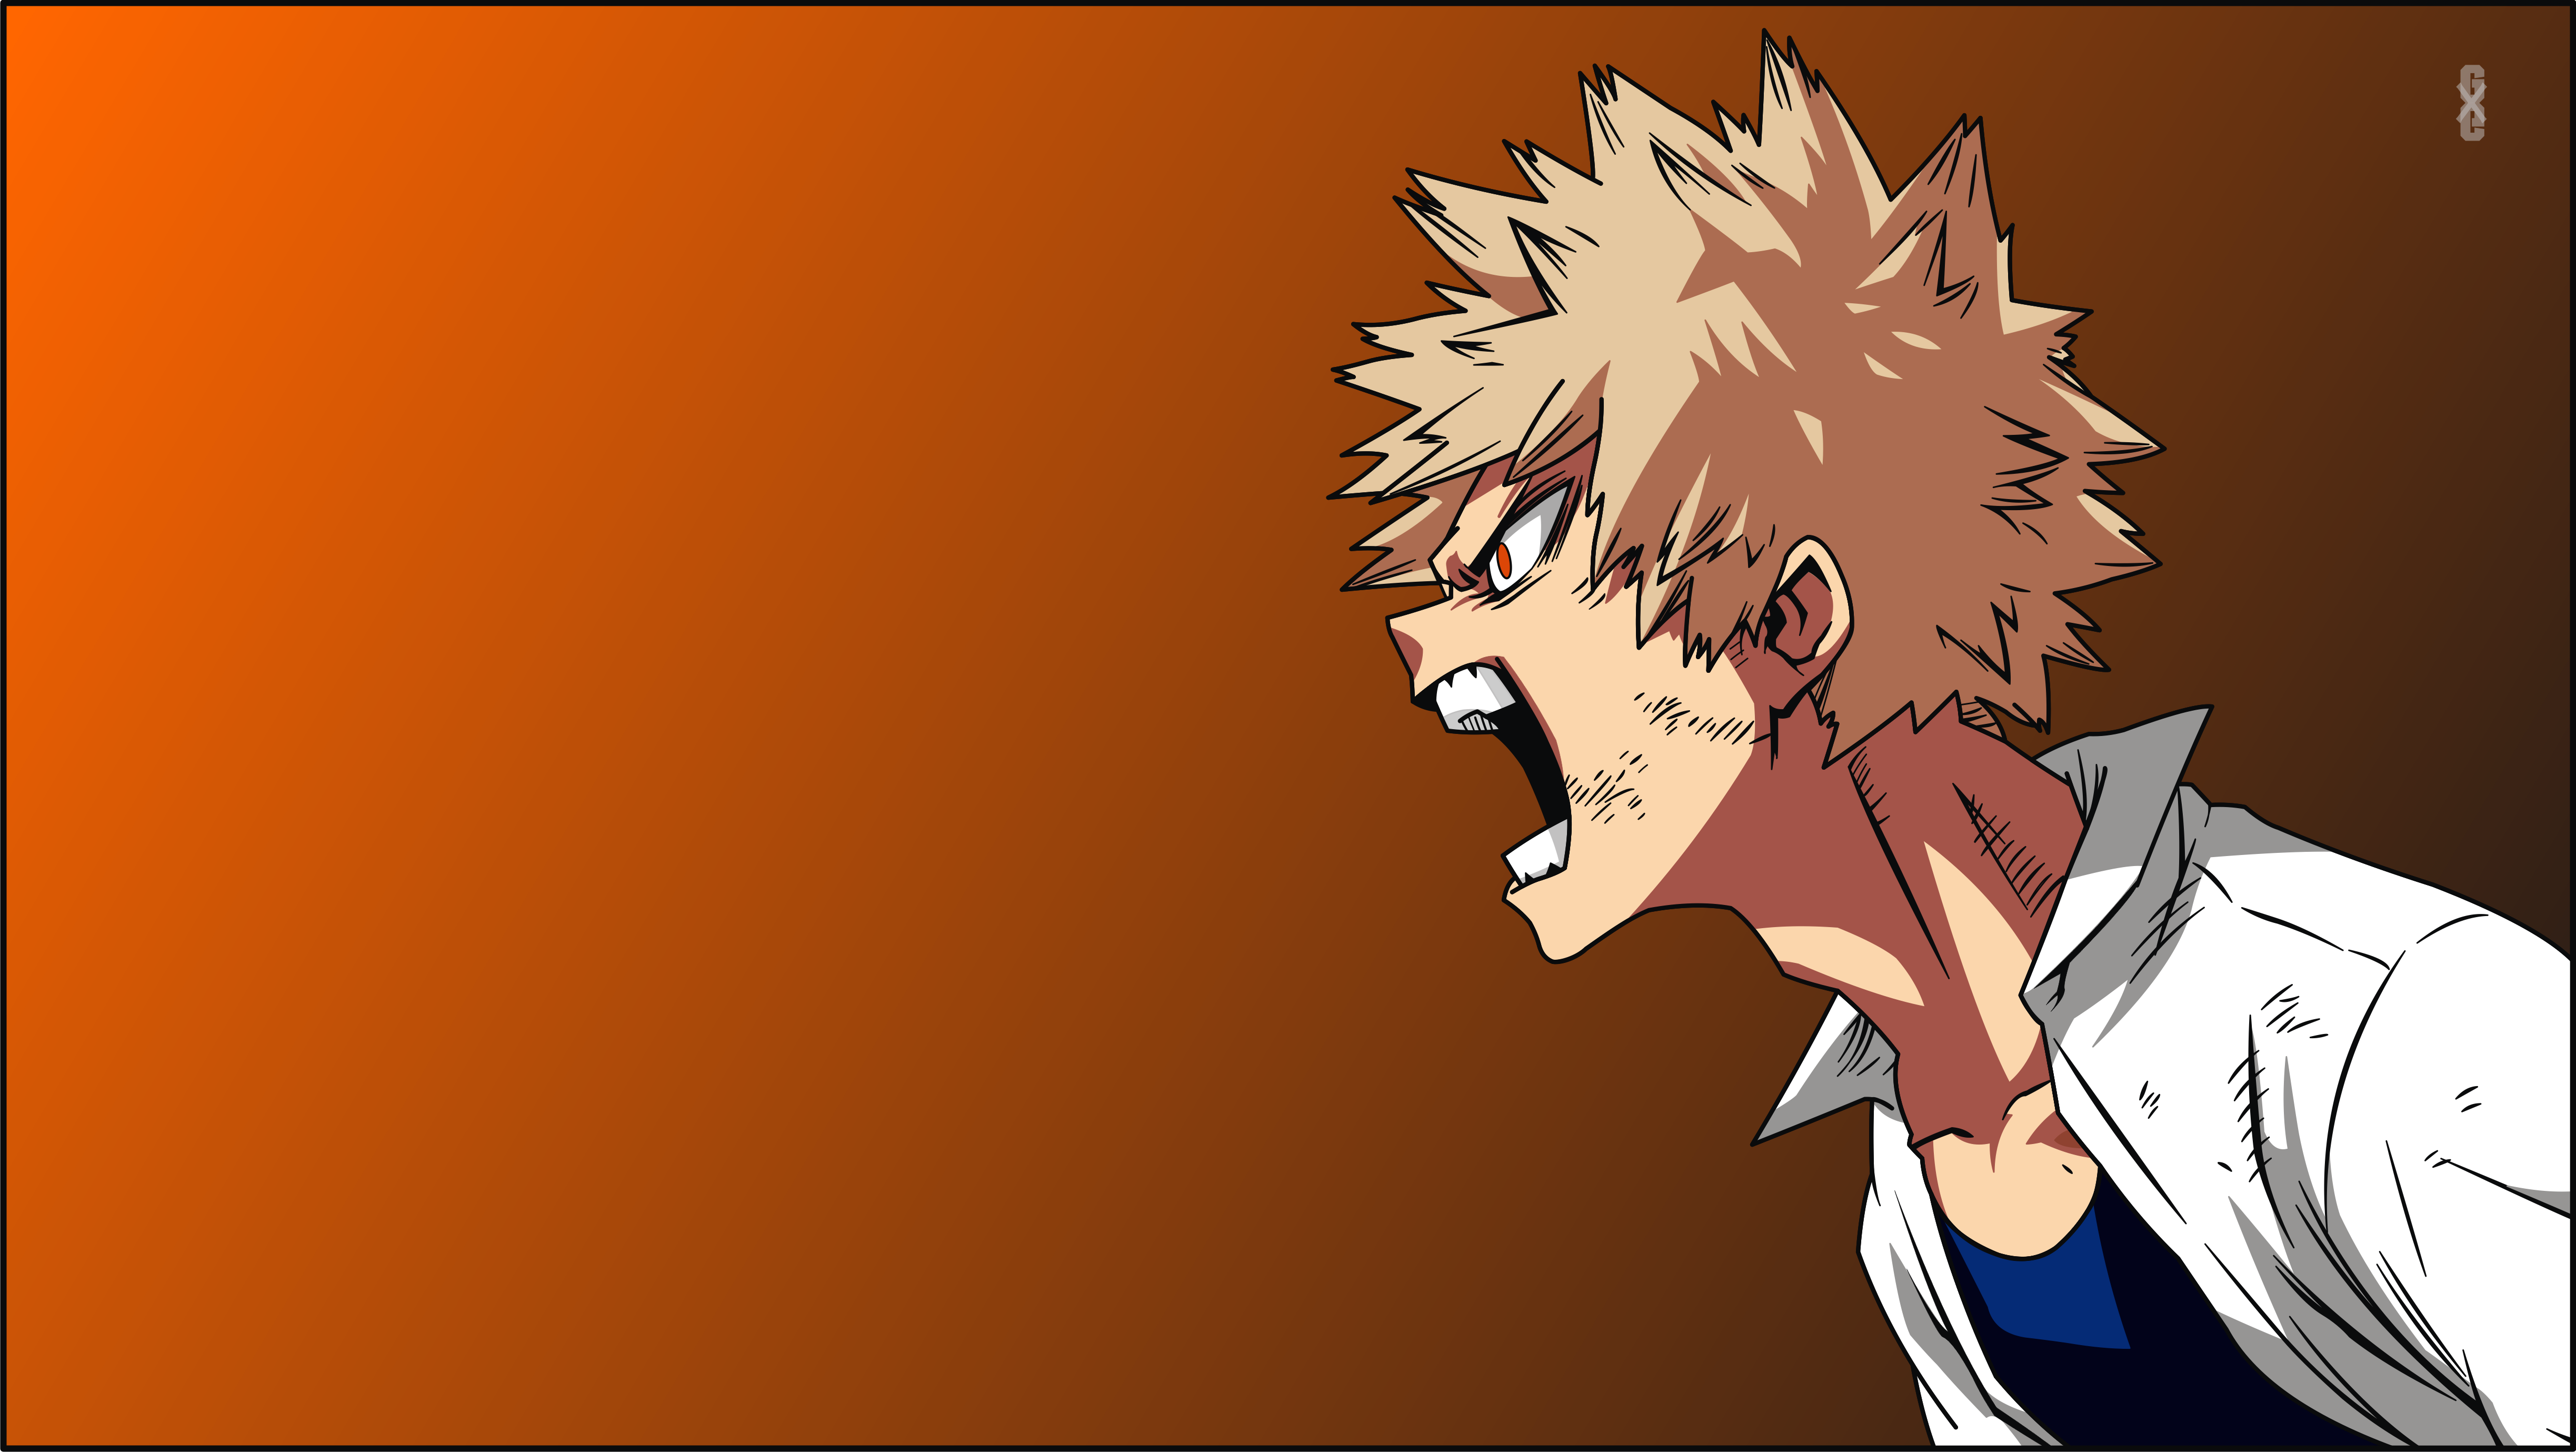 Anime 4894x2758 anime Boku no Hero Academia anime boys simple background angry orange background